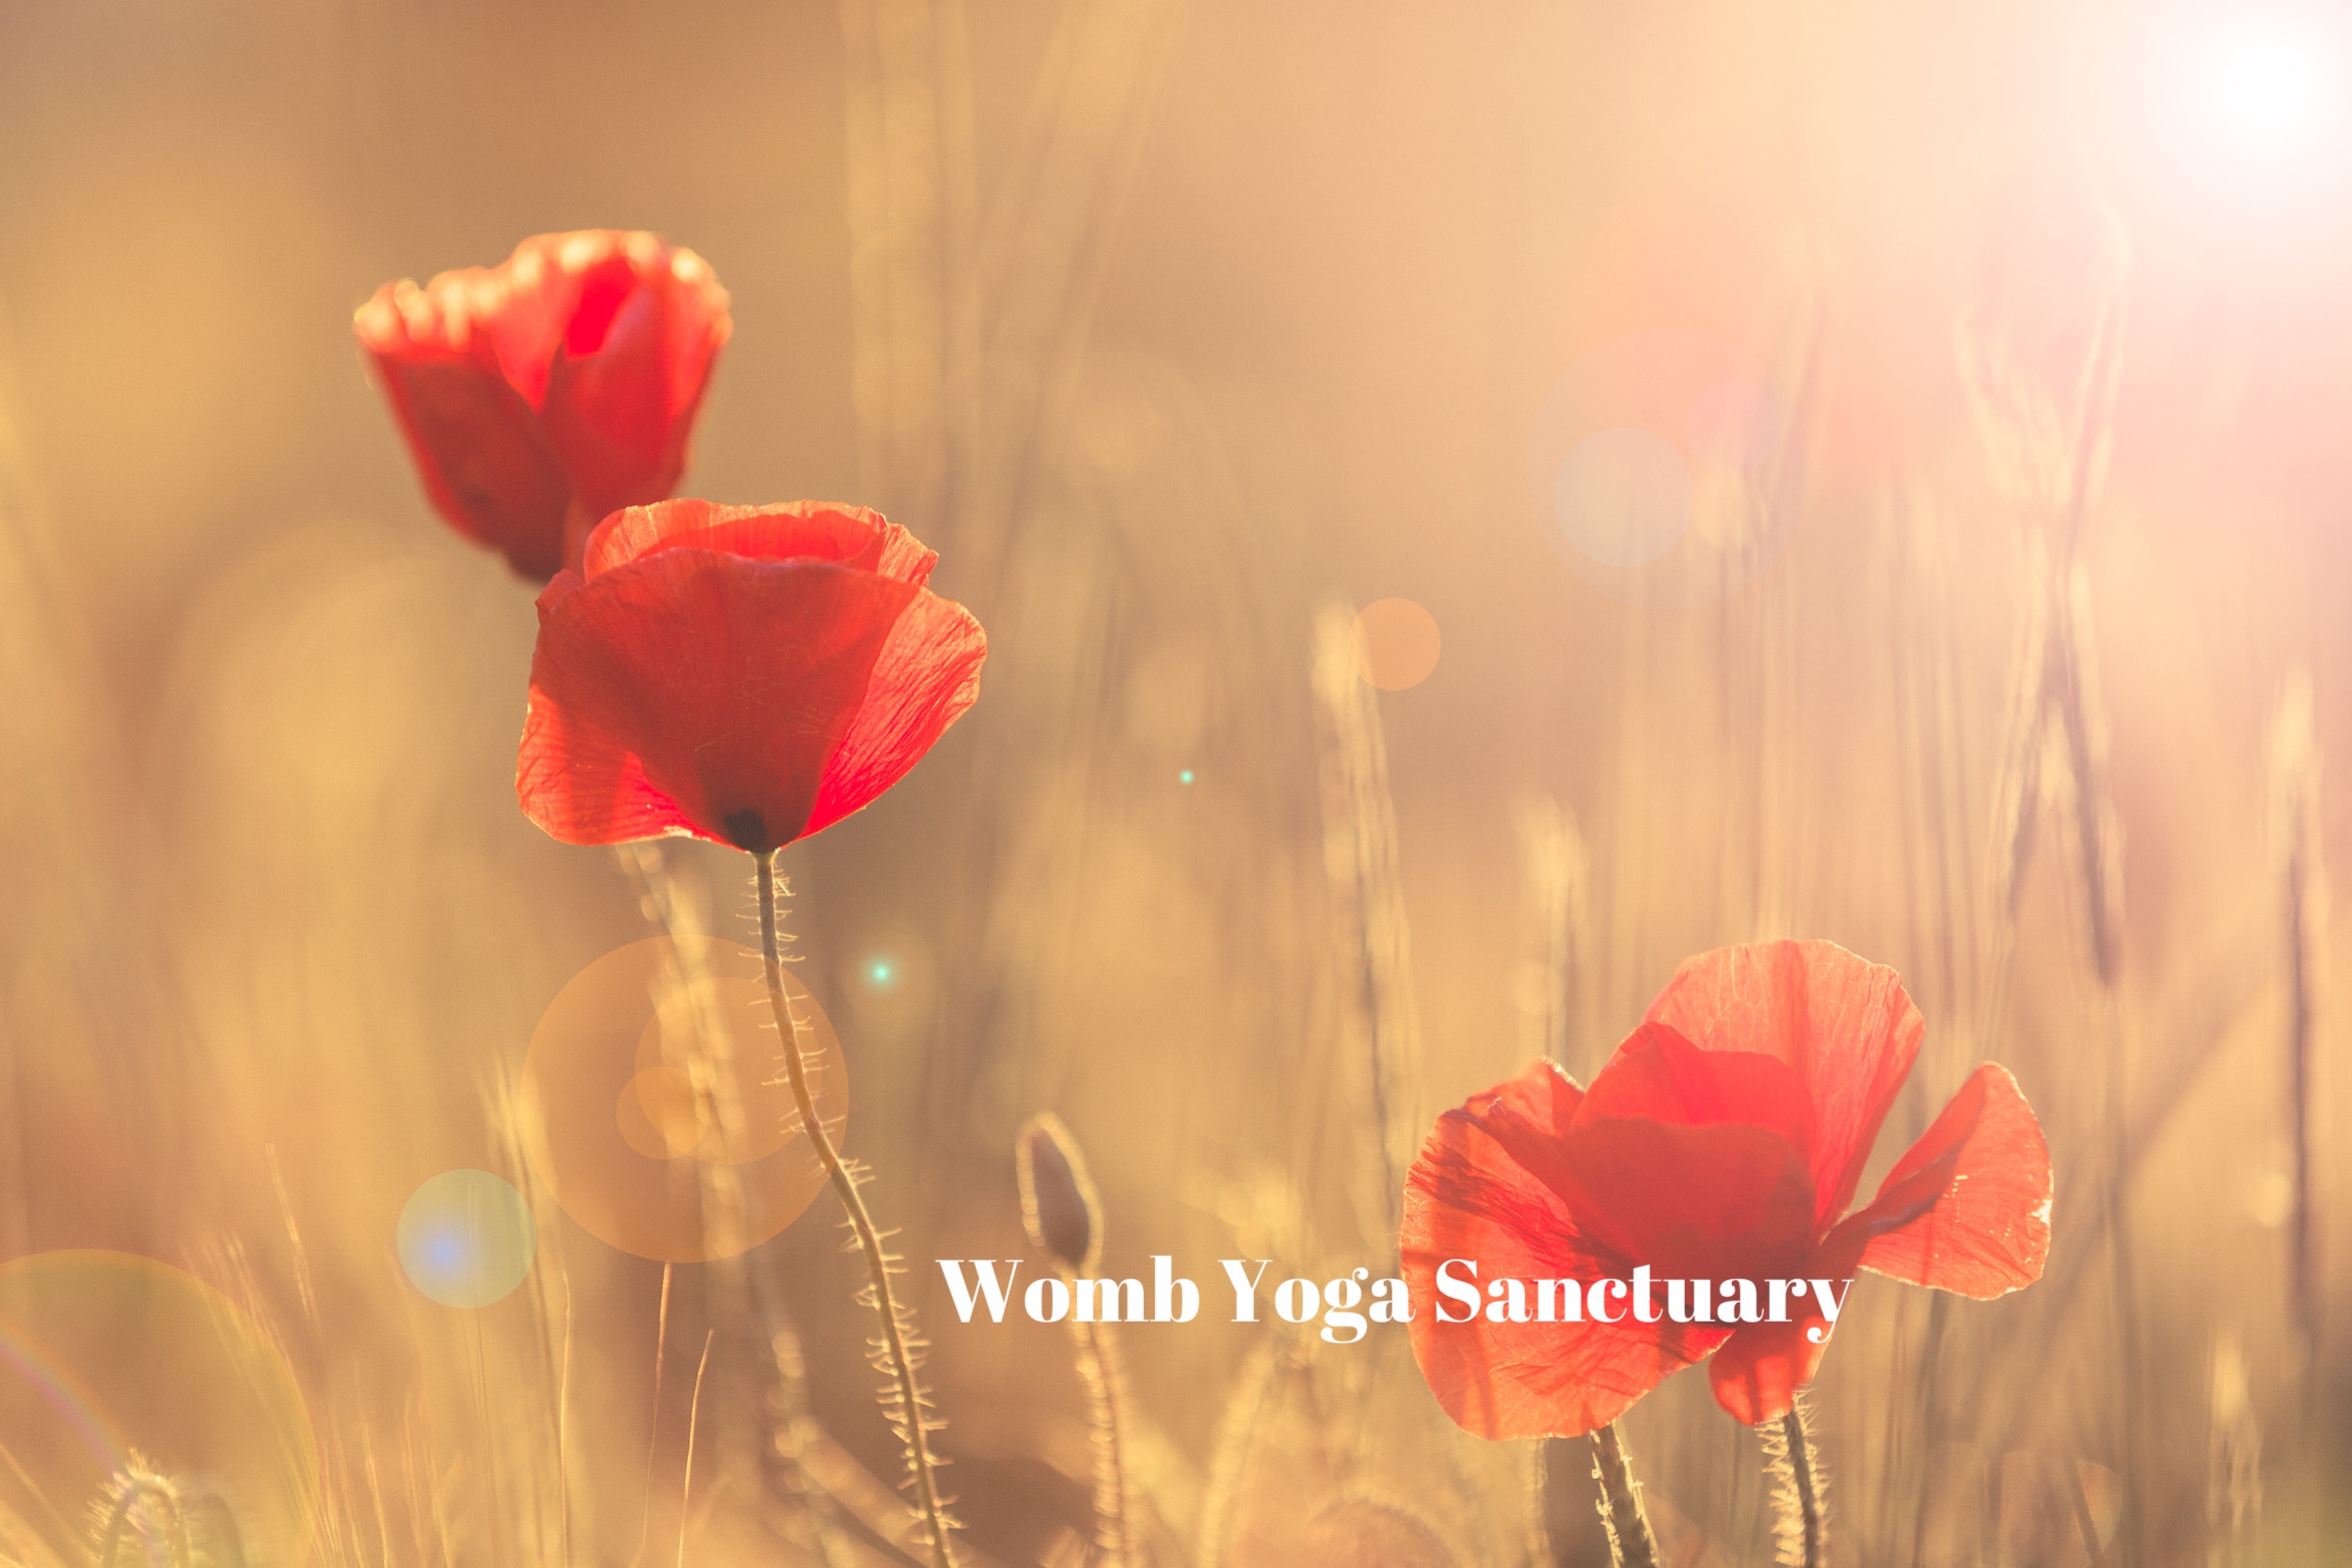 Womb Yoga Sanctuary